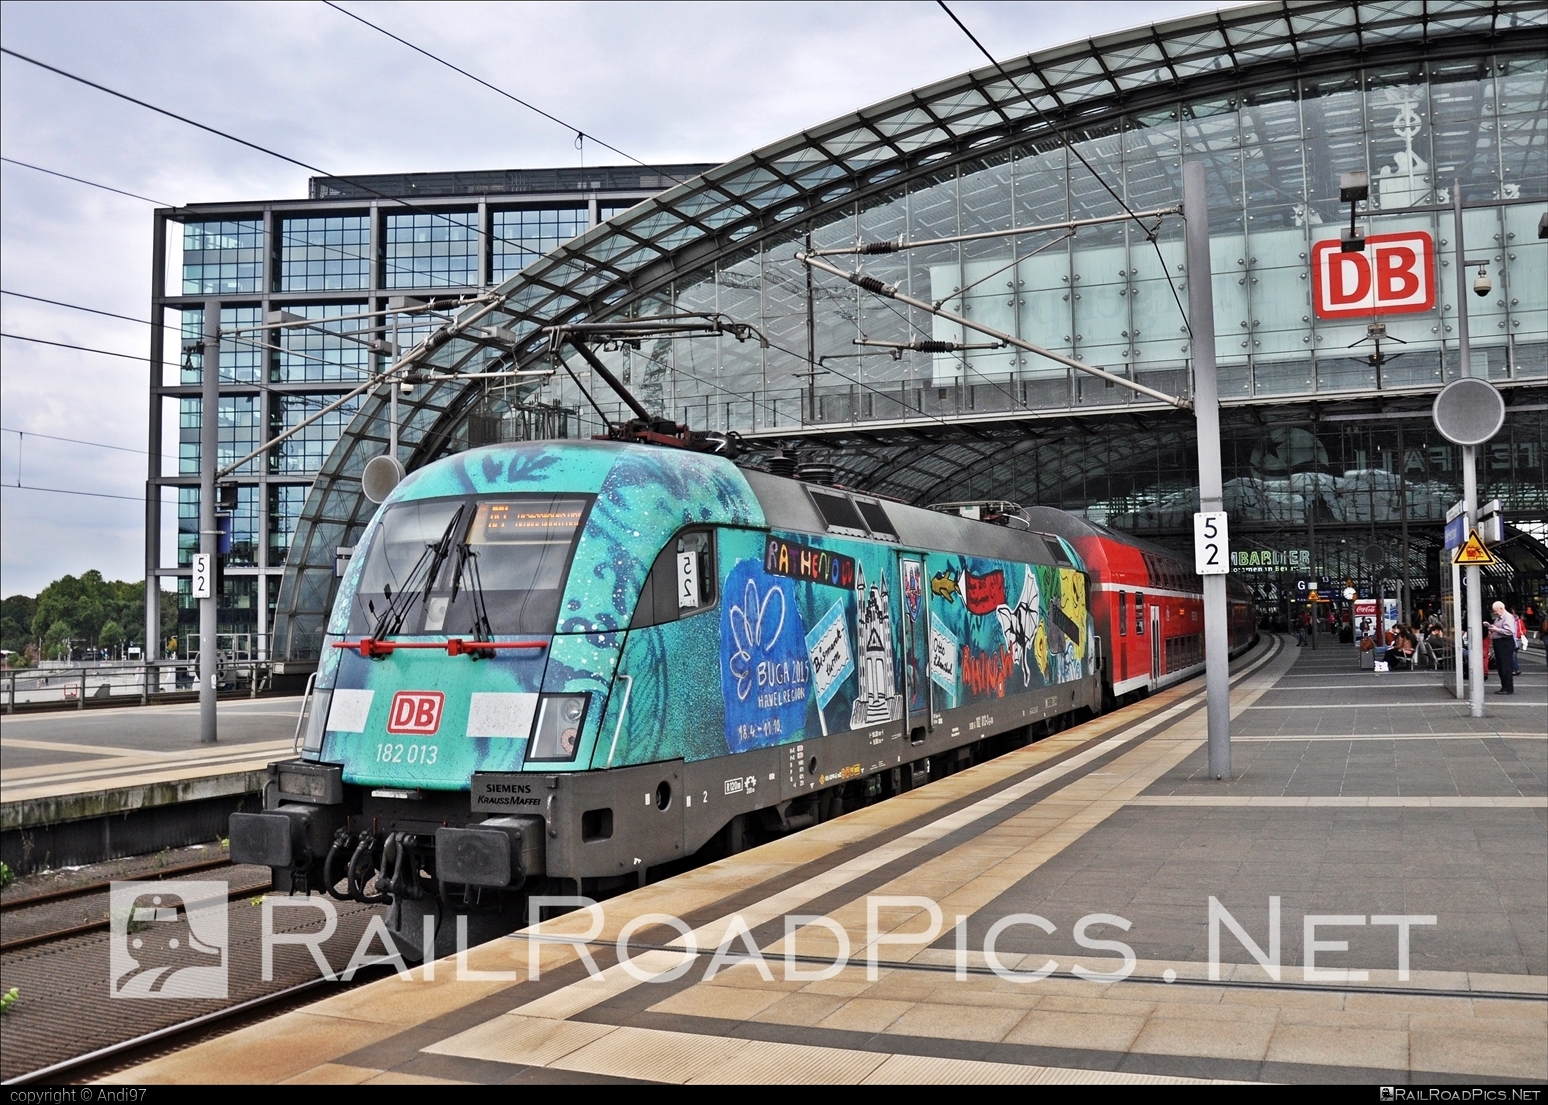 Siemens ES 64 U2 - 182 013 operated by Deutsche Bahn / DB AG #db #deutschebahn #es64 #es64u2 #eurosprinter #siemens #siemensEs64 #siemensEs64u2 #siemenstaurus #taurus #tauruslocomotive